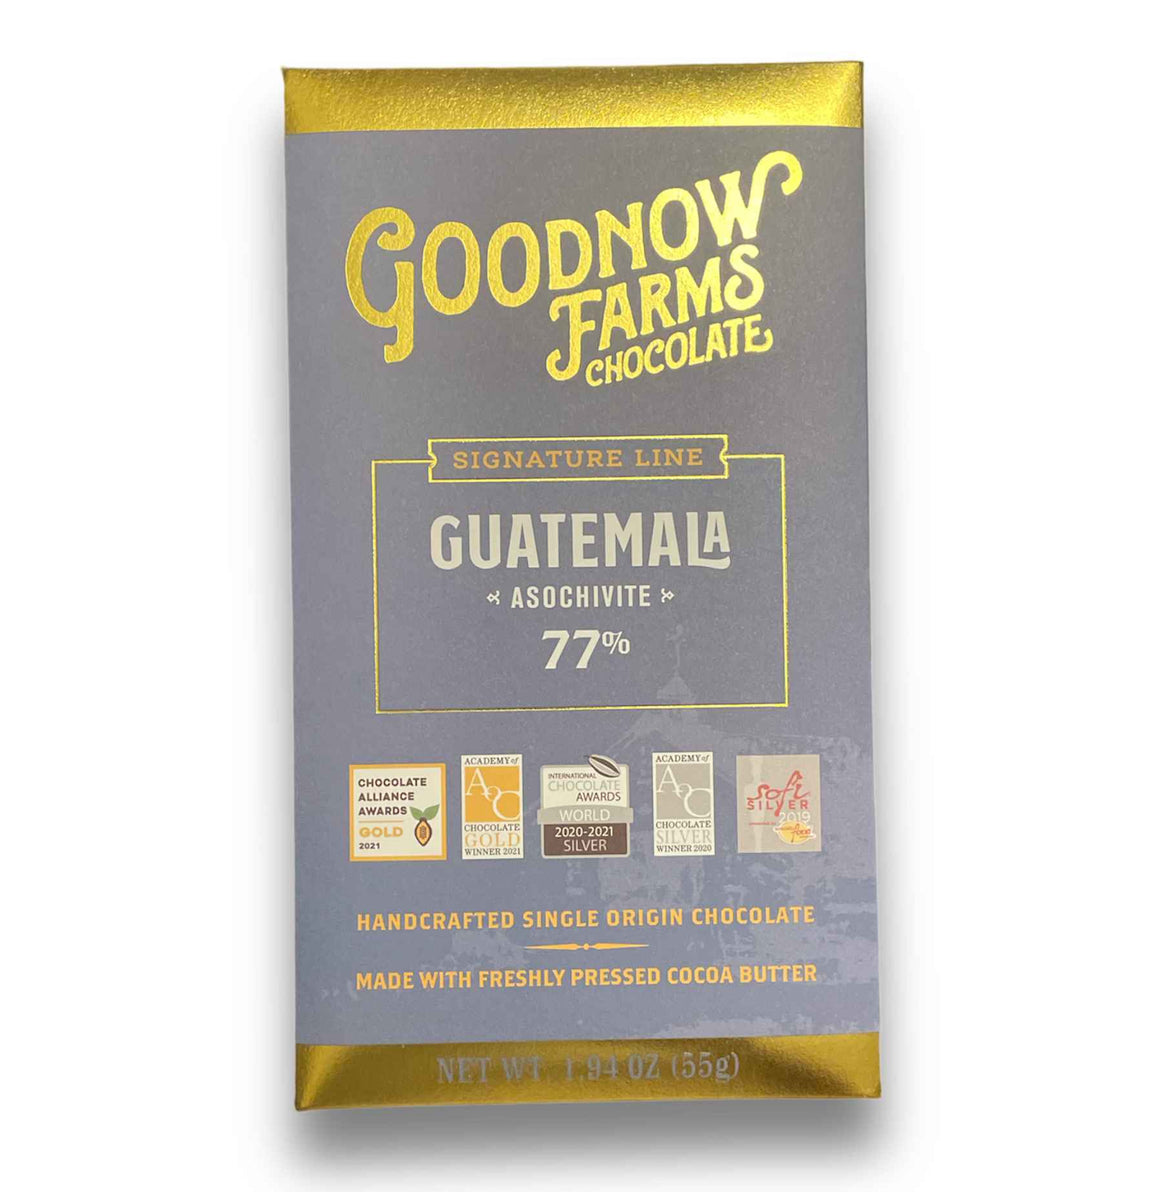 Goodnow Farms Dark Chocolate - Asochivite, Guatemala 77%